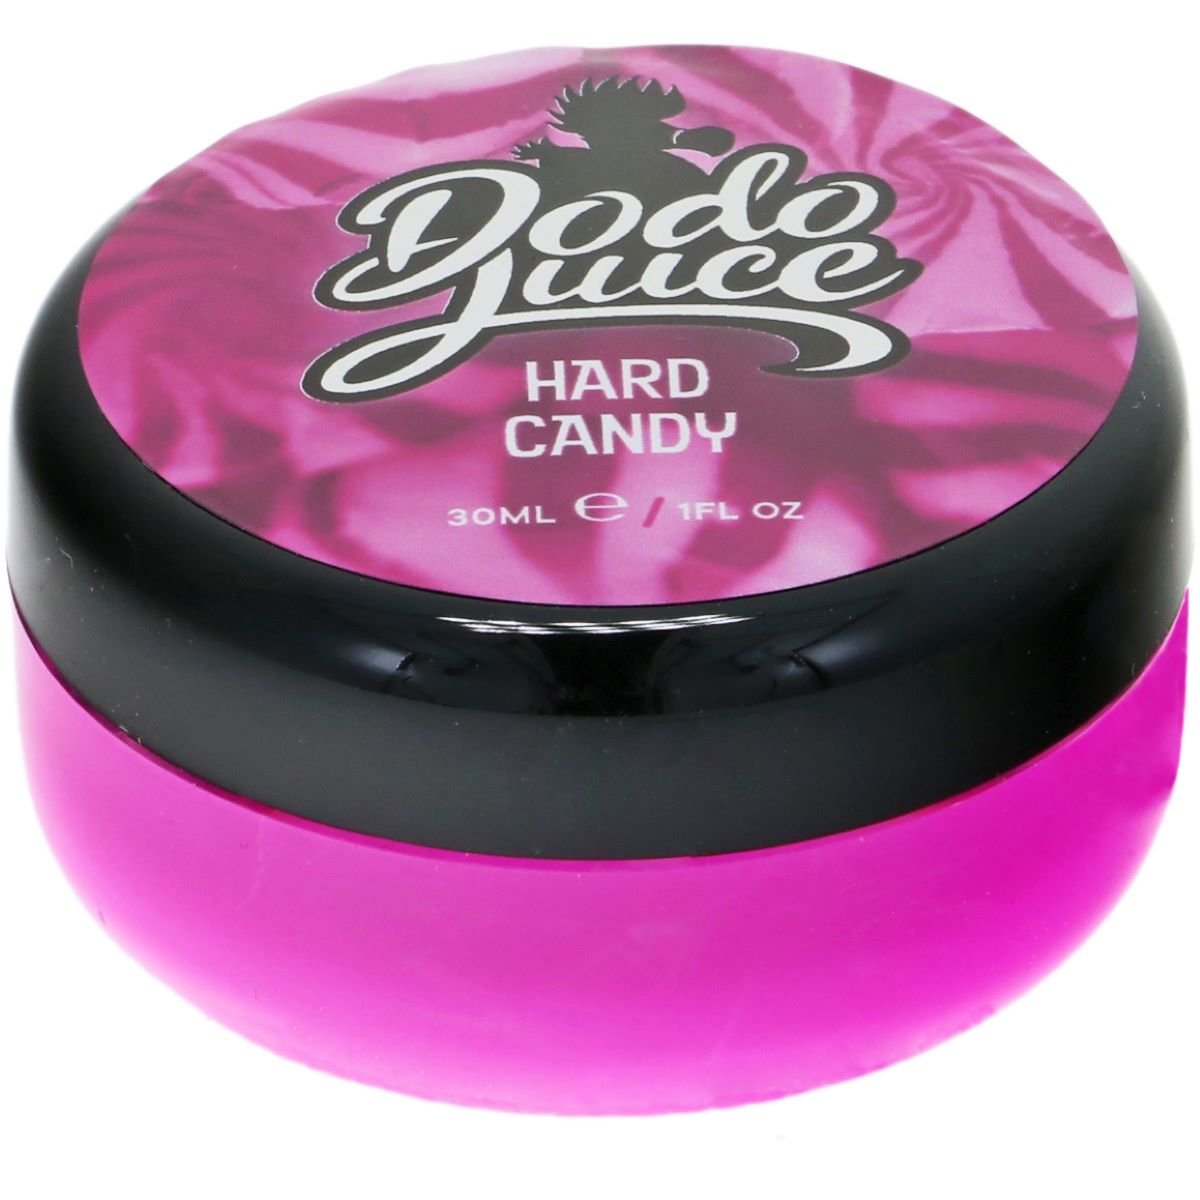 Hard Candy hard wax for any coloured car - 30ml